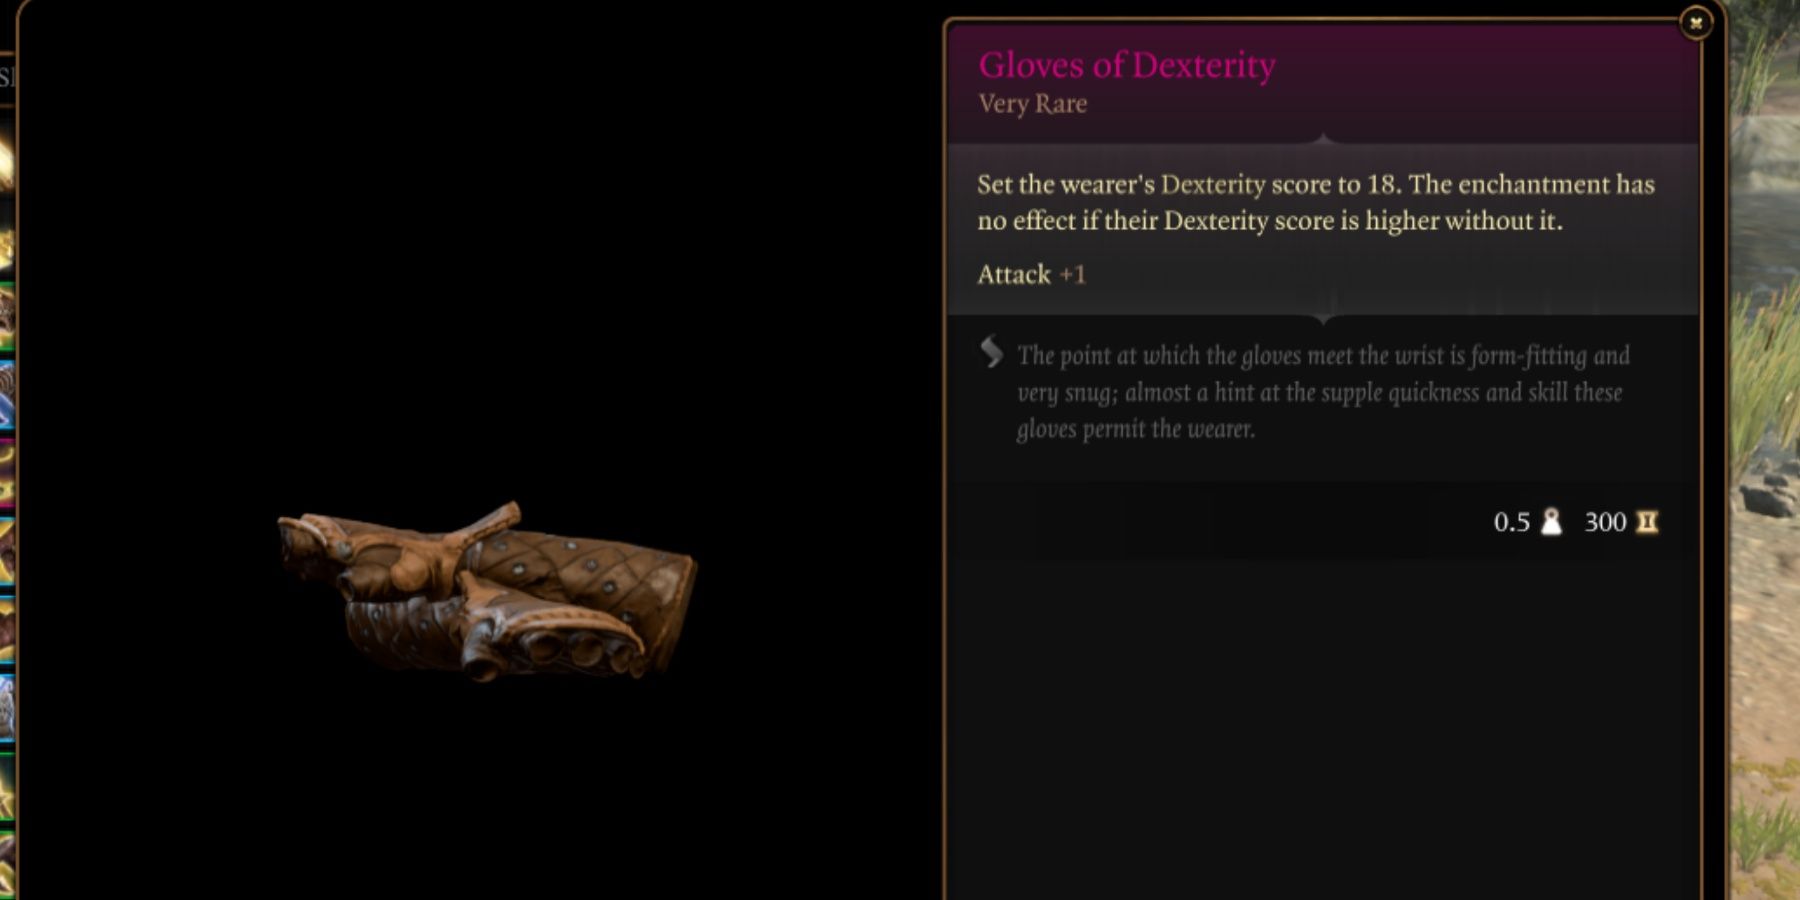 BG3 Gloves of Dexterity in-game item menu description